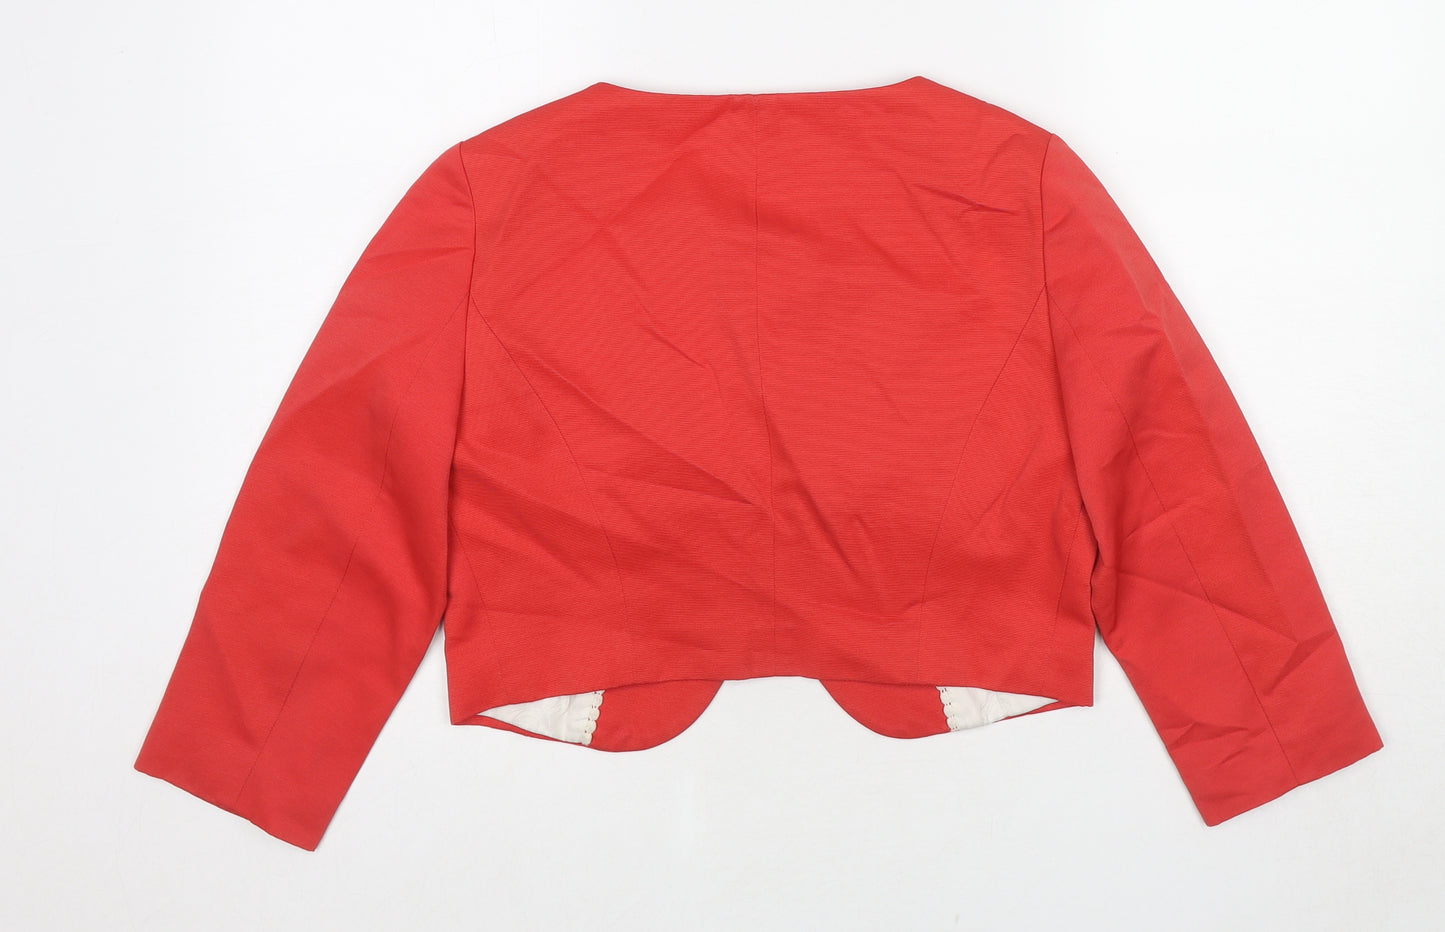 Autograph Womens Red Jacket Blazer Size 10 Button